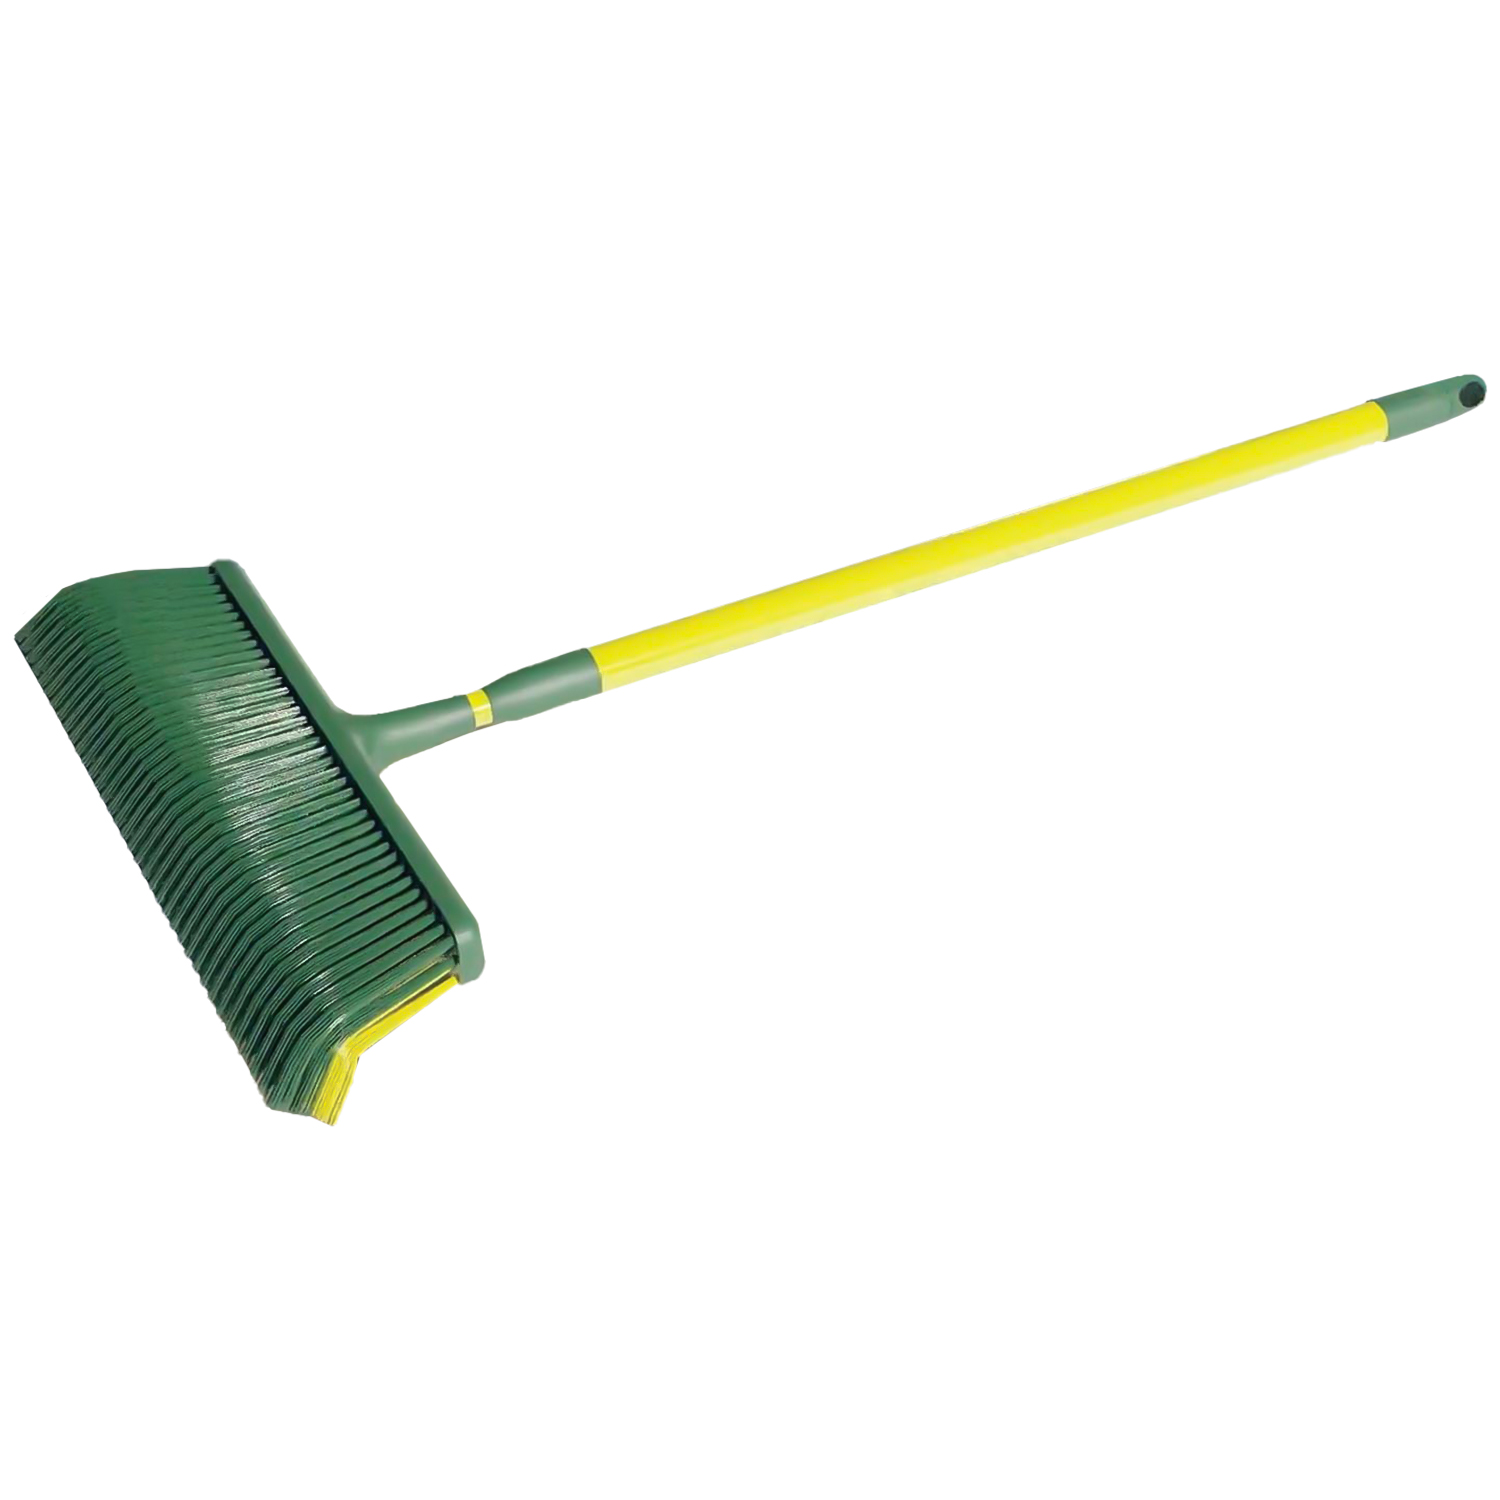 Green Broom Rake Image 1